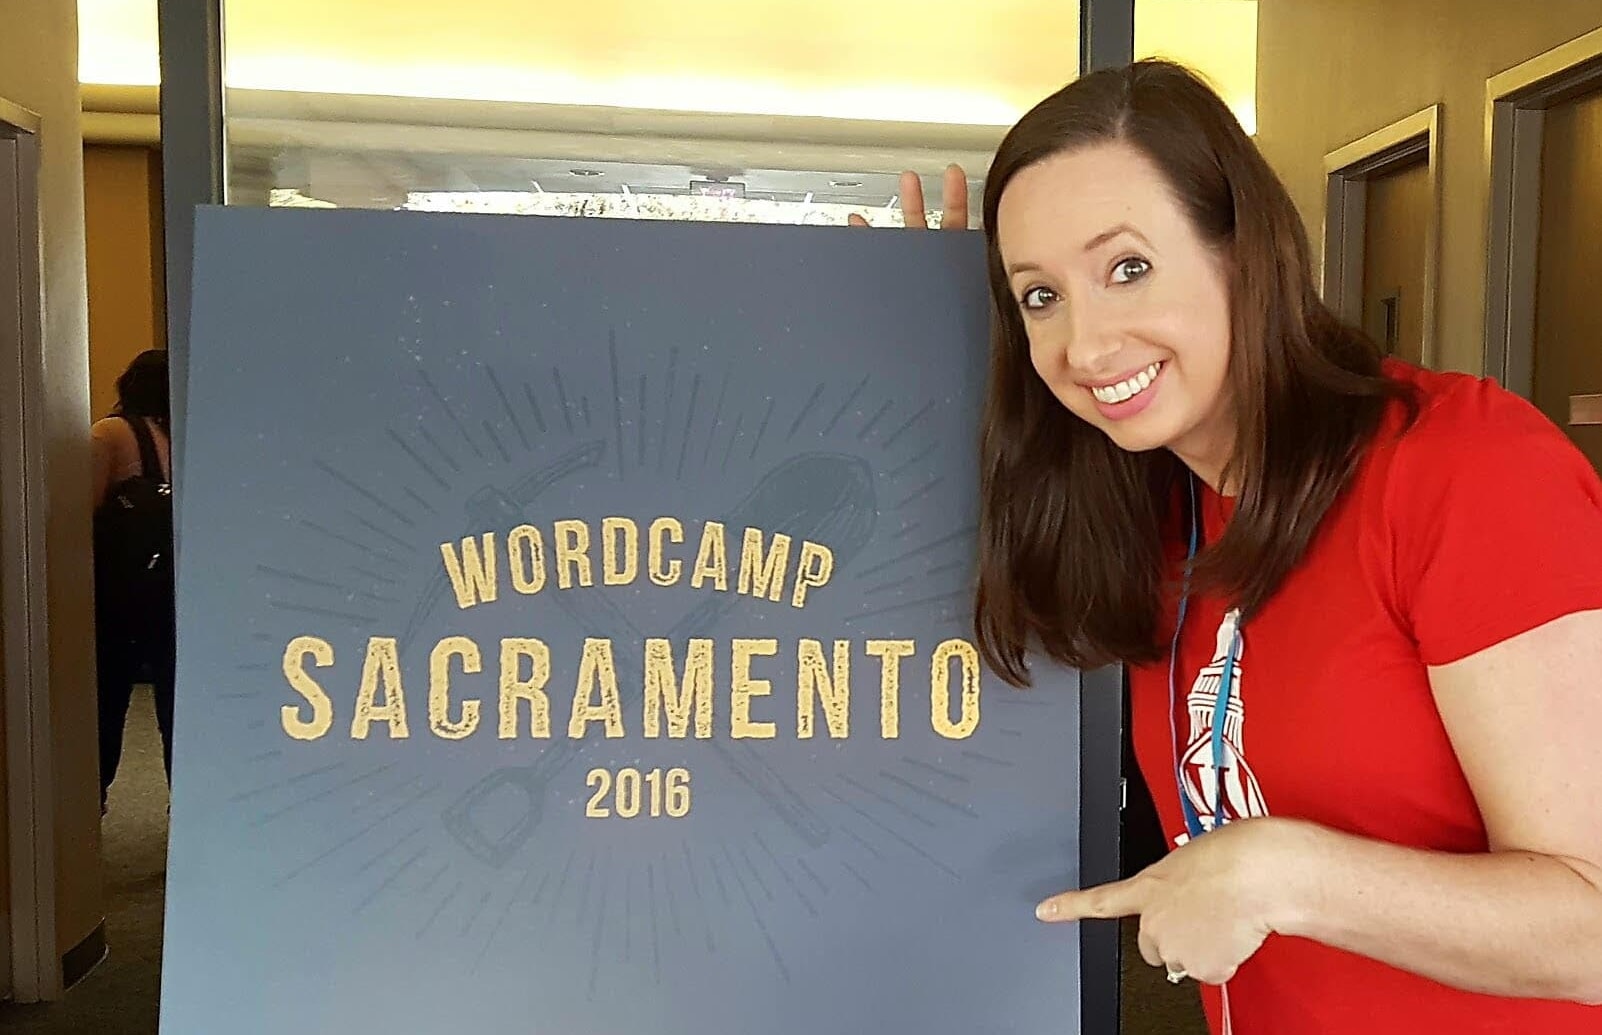 WordCamp Sacramento 2016 marketing